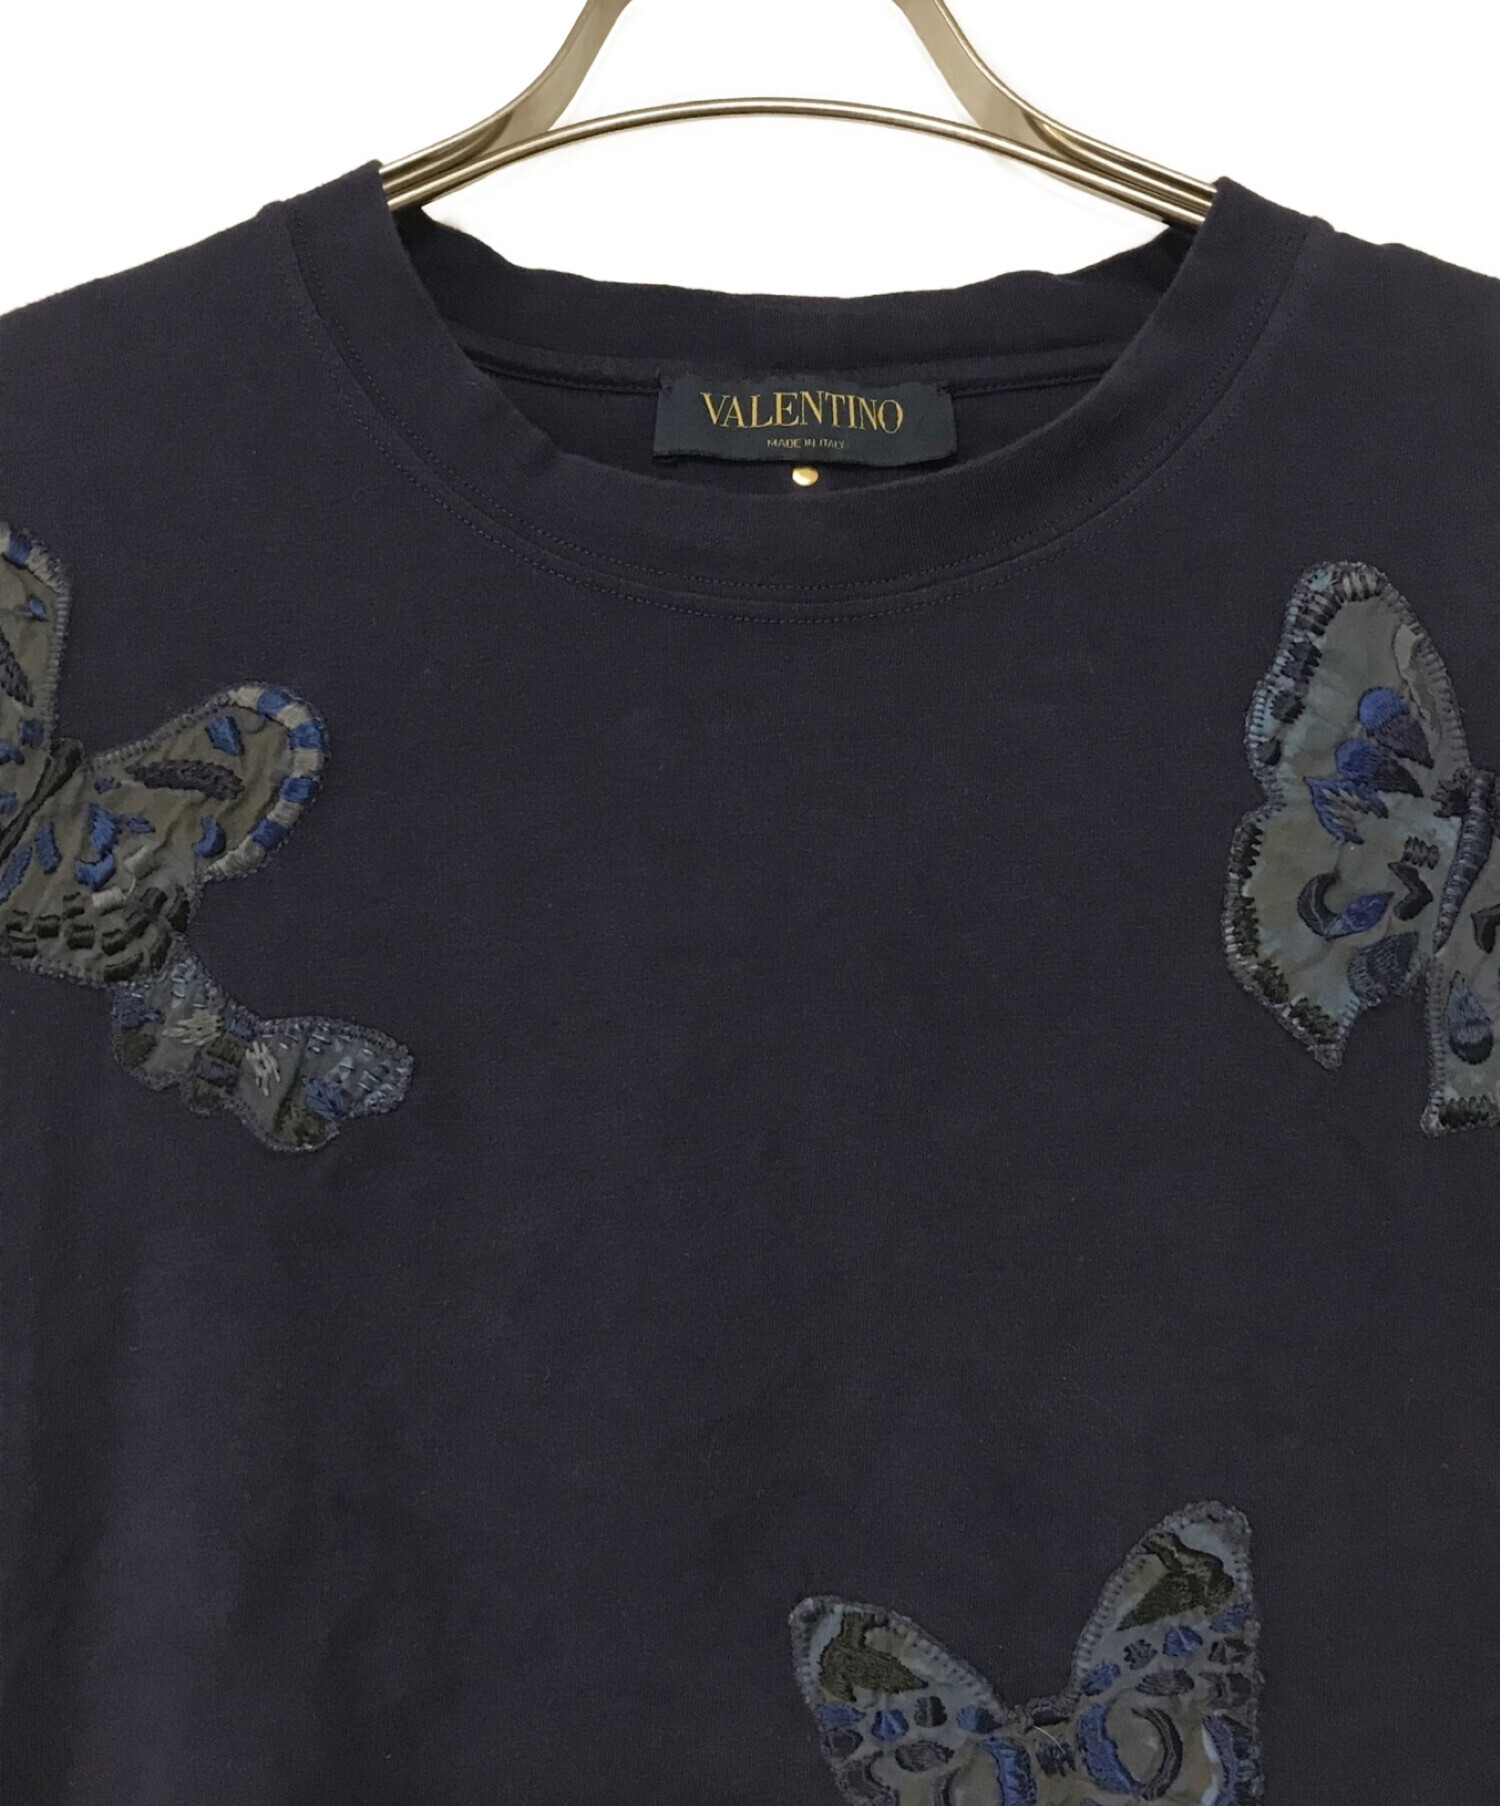 VALENTINO (ヴァレンティノ) Tシャツ ネイビー サイズ:S